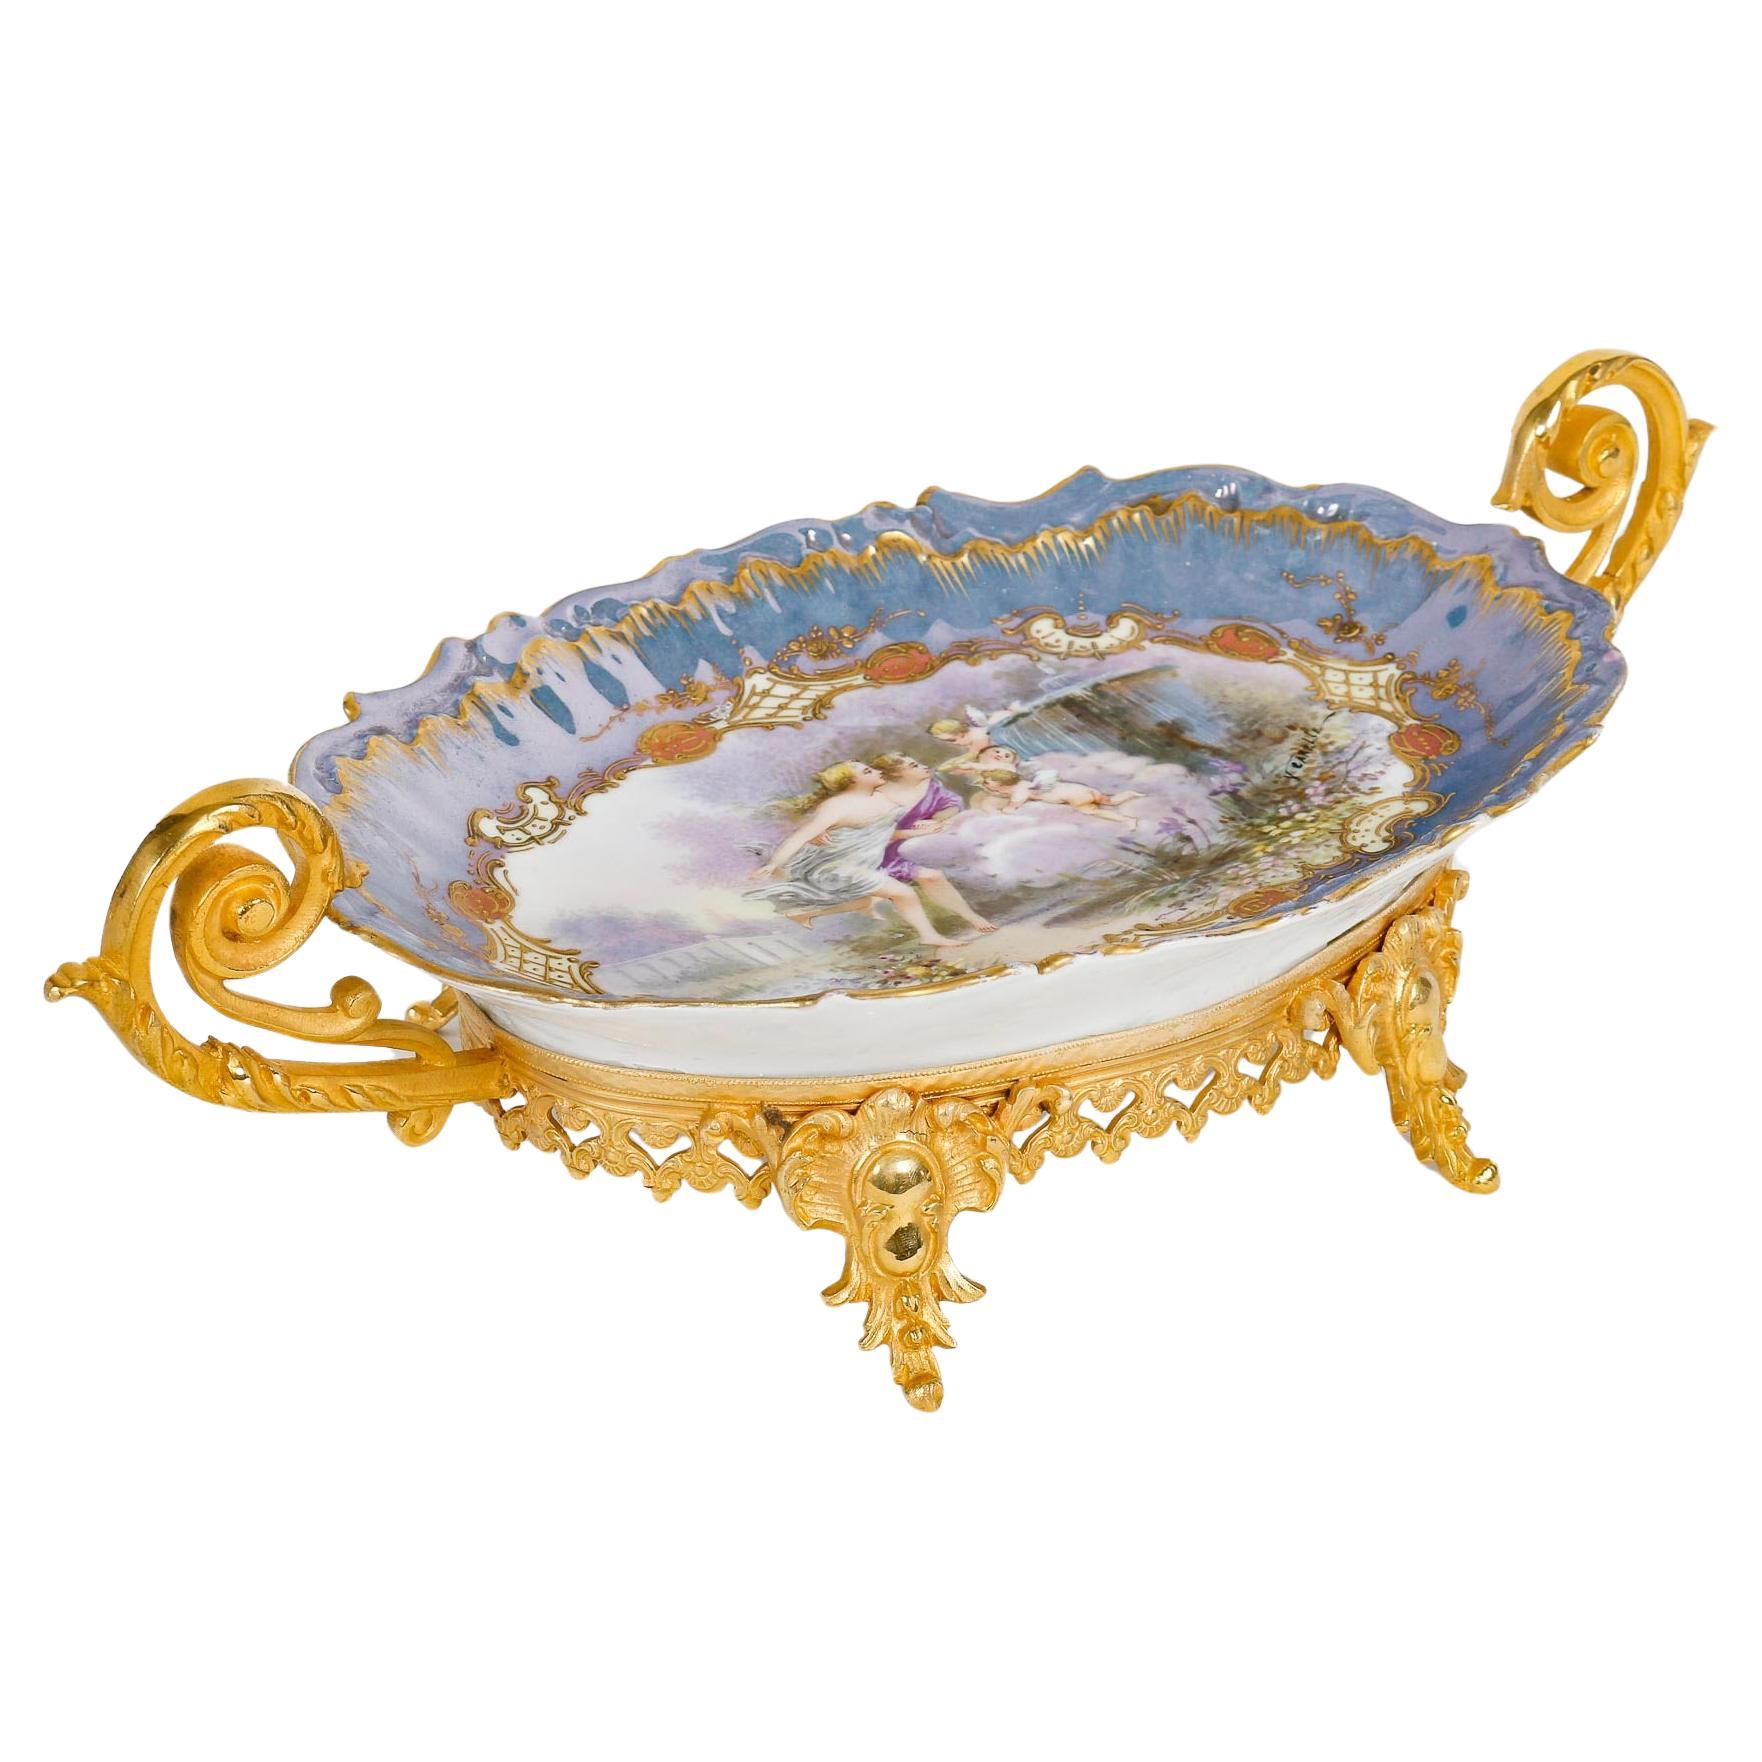 A 19th Century Sèvres Porcelain Bowl, Napoleon III Period.